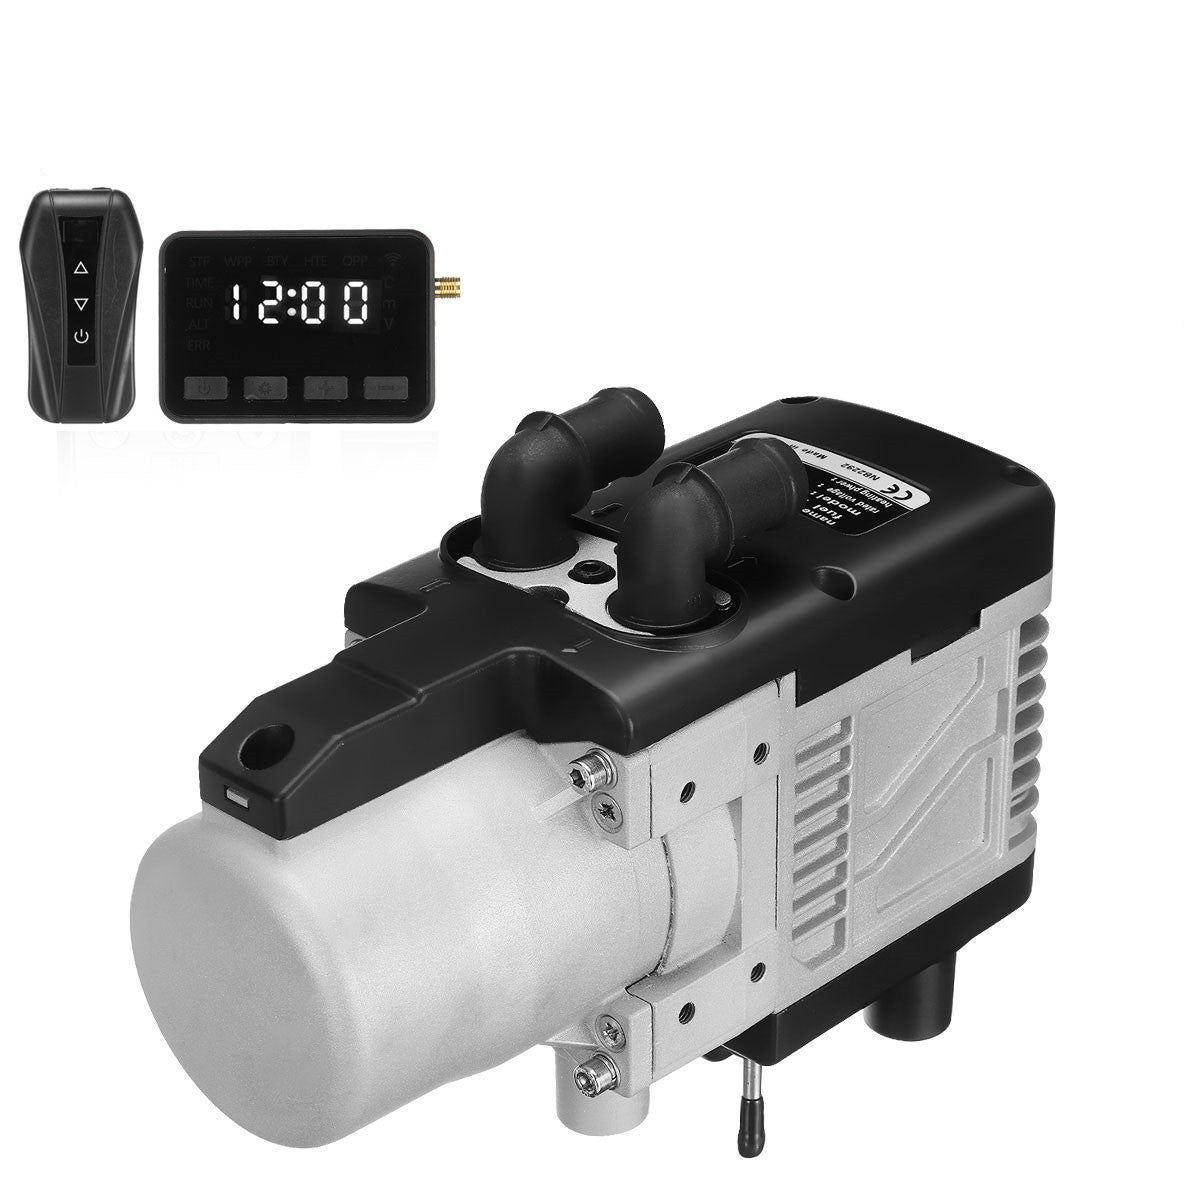 w51-plumbing-heater-wireless-remote-control-12v-black